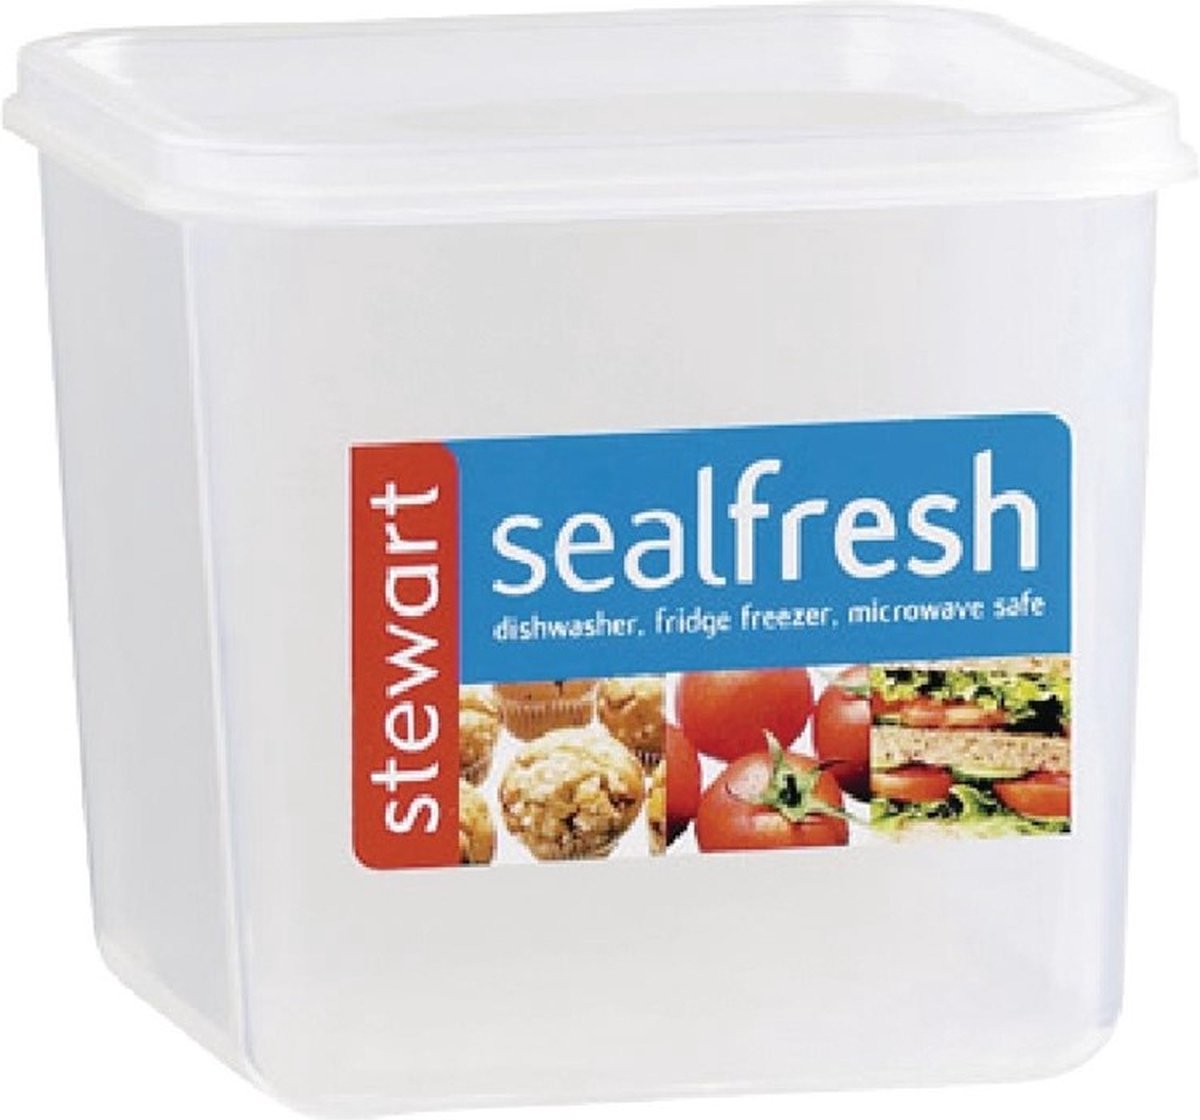 Seal Fresh dessertcontainer 0.8ltr